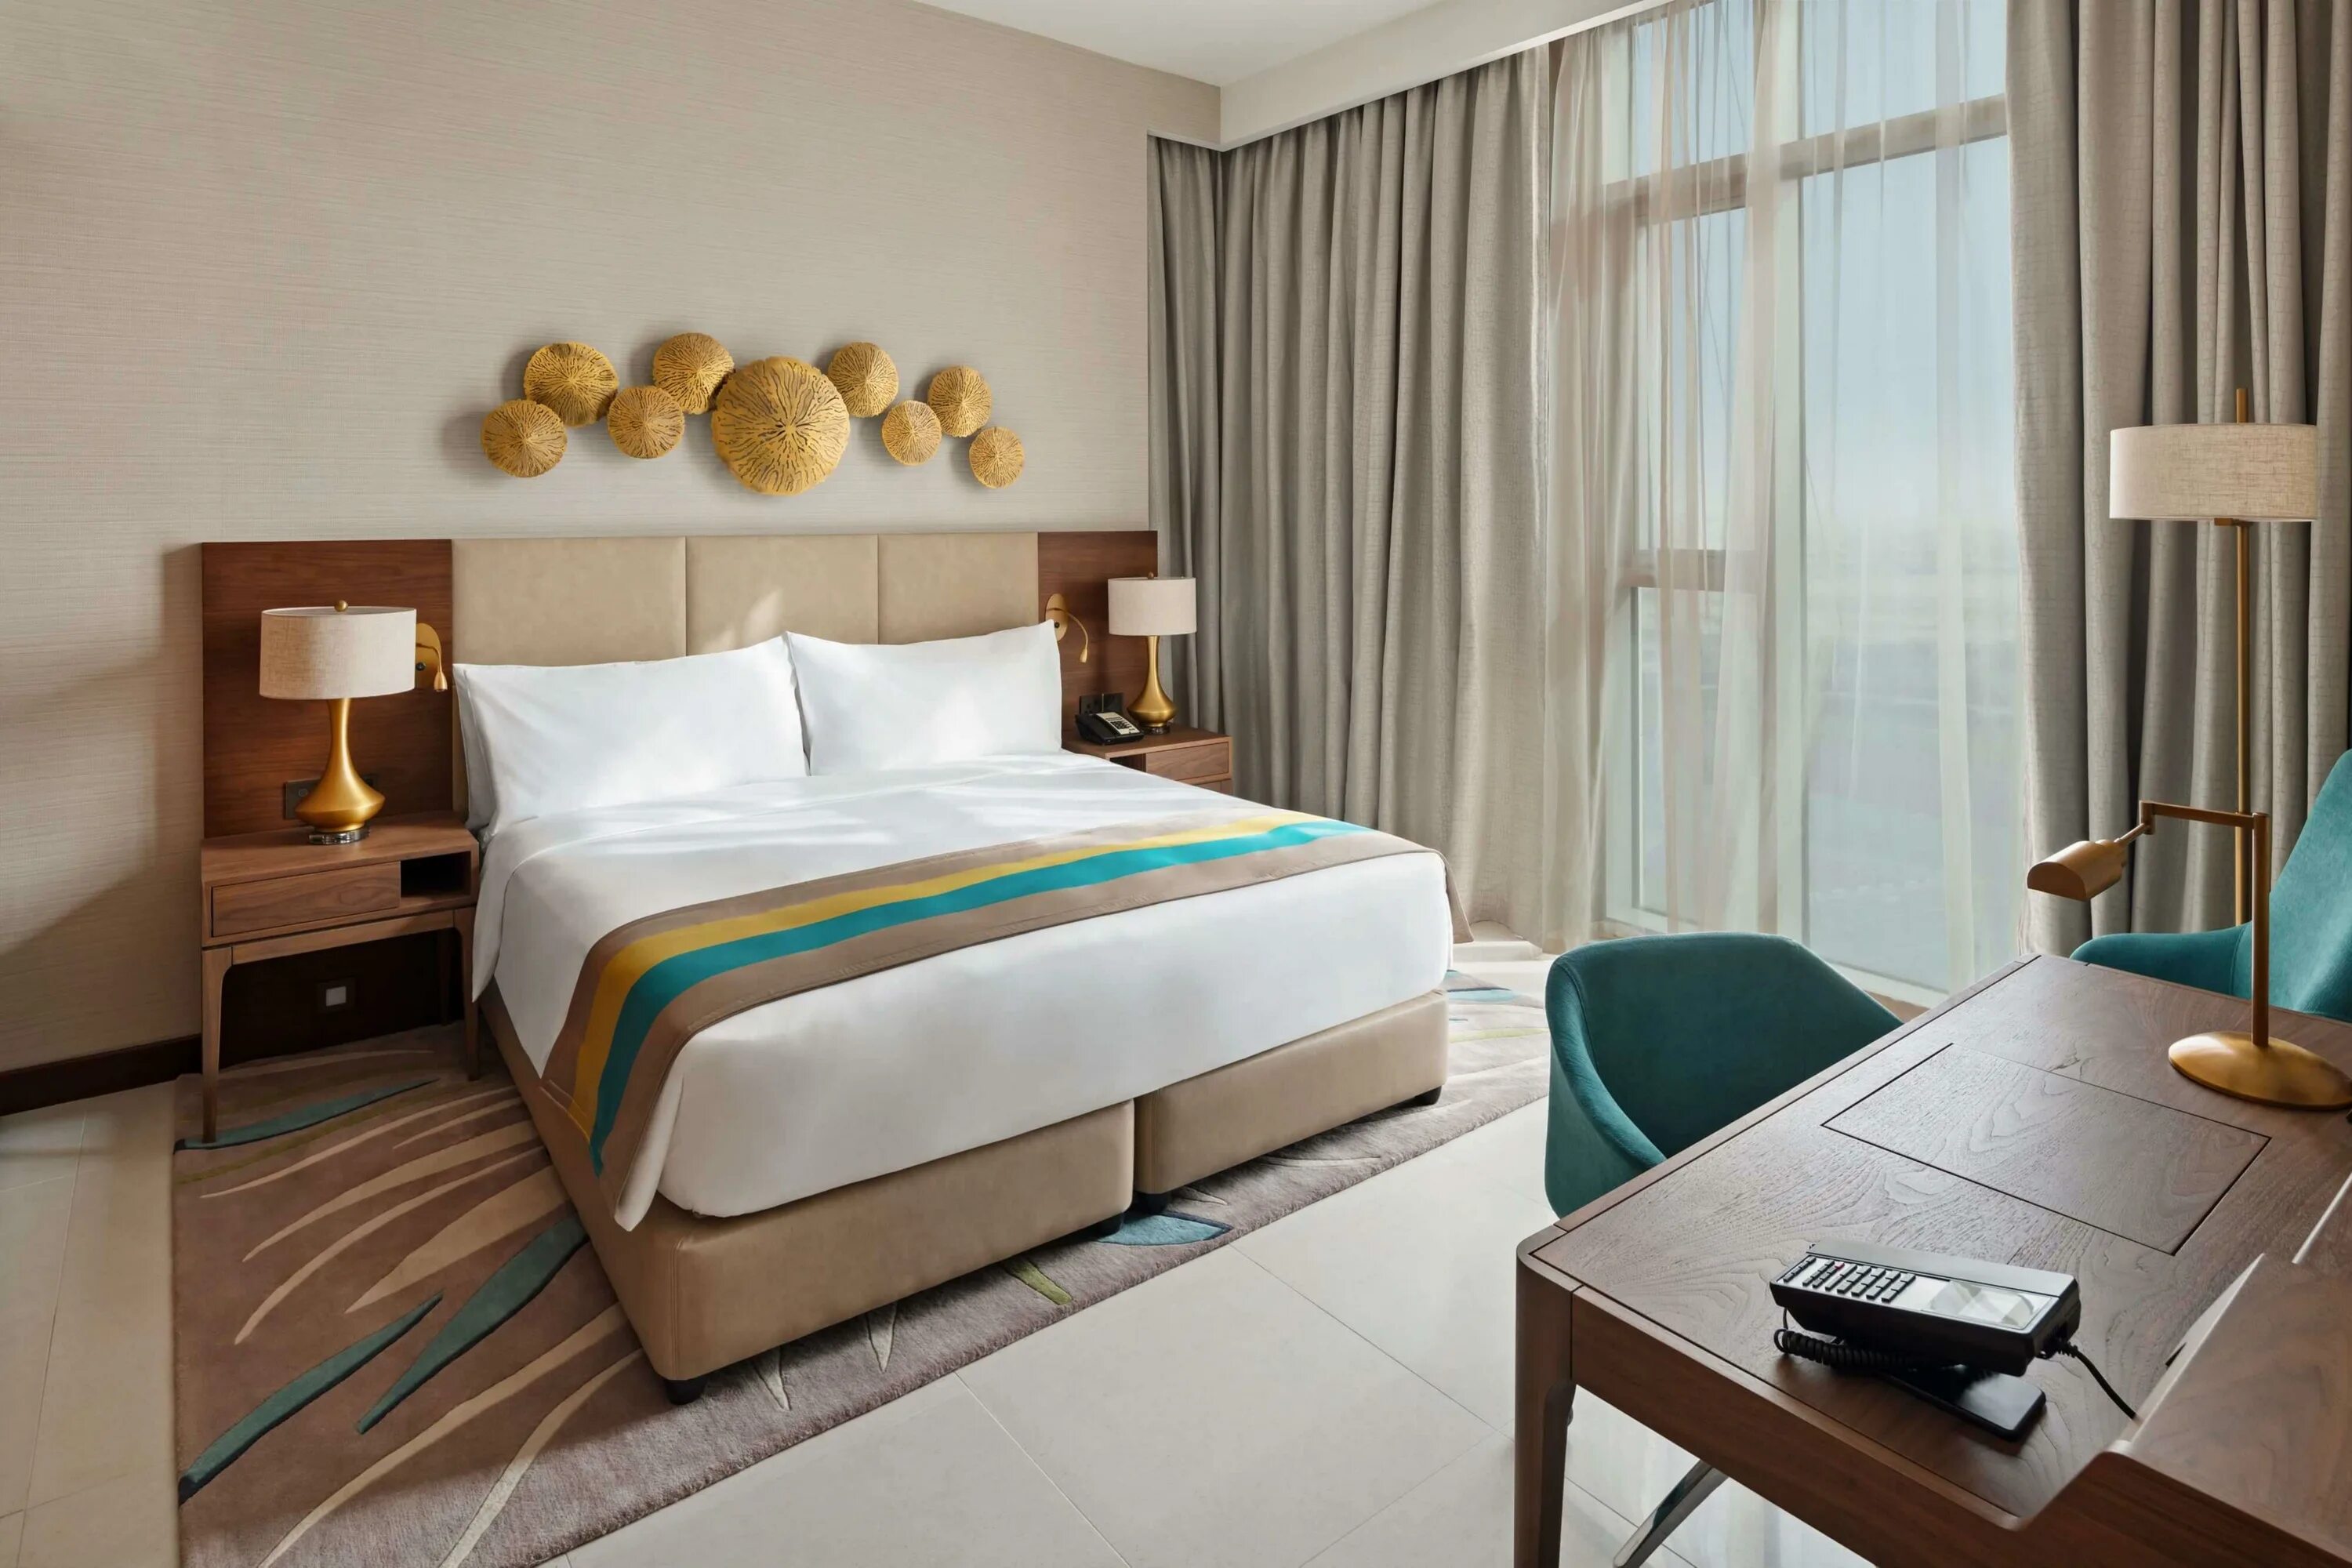 Holiday дубай. Отель Holiday Inn Dubai al Maktoum Airport 4*. Holiday Inn Dubai al-Maktoum Airport, an IHG Hotel 4*. Holiday Inn Dubai al-Maktoum Airport, an IHG Hotel. Тур в отель Holiday Inn Dubai al Maktoum Airport 4*.